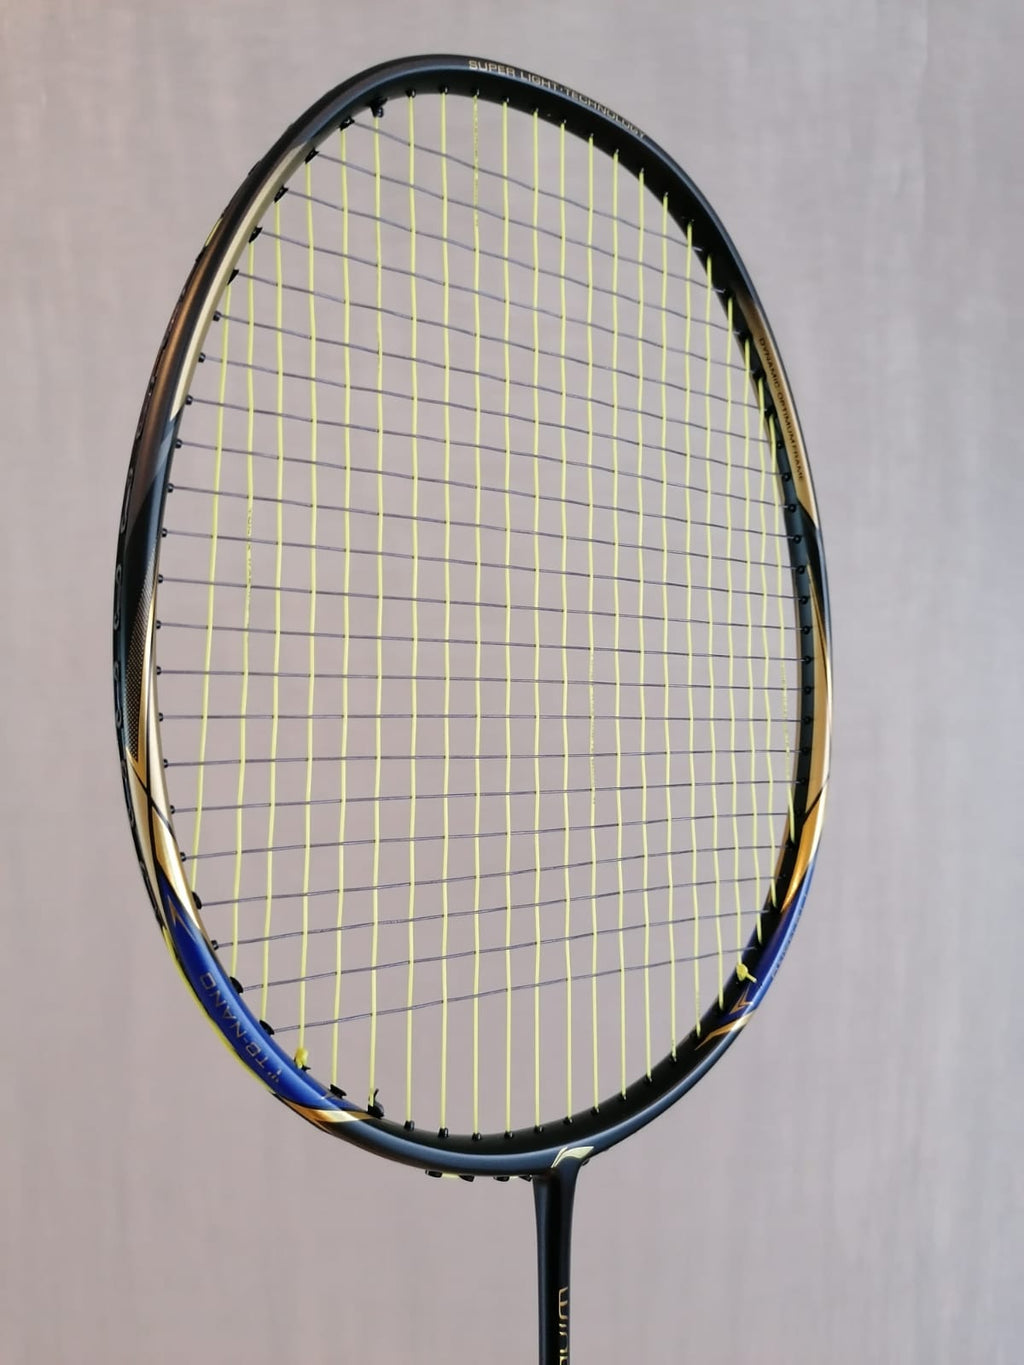 WINDSTORM 74: Li-Ning's lightestarjunar badminton racket